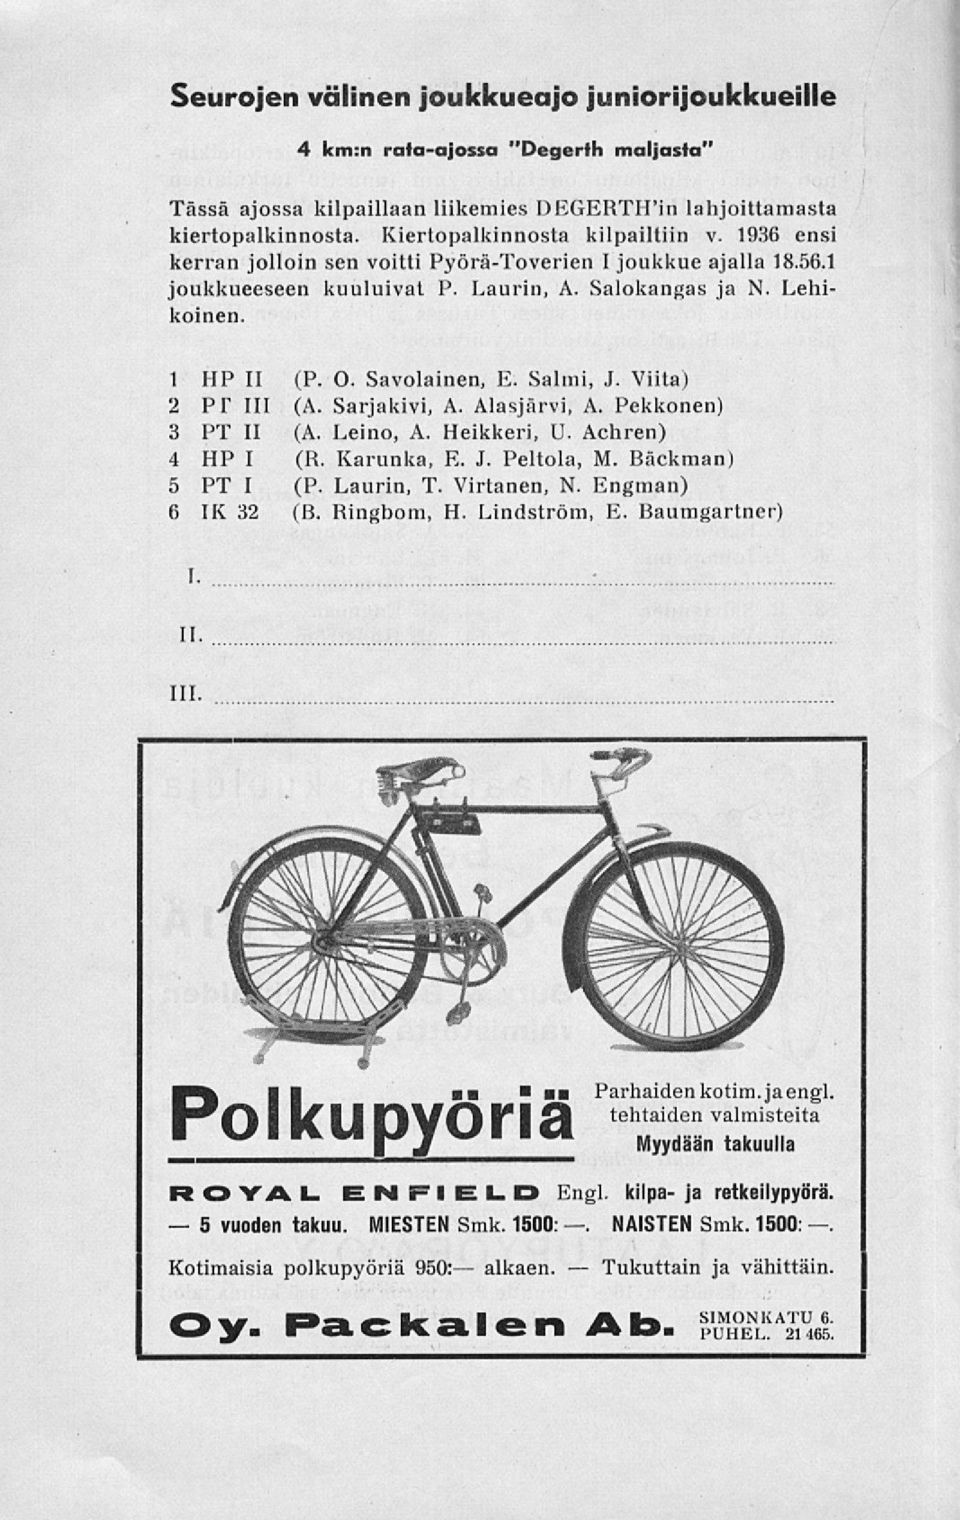 Savolainen, E. Salmi, J. iita) 2 PT 111 (A. Sarjakivi, A. Alasjärvi, A. Pekkonen) 3 PT II (A. Leino, A. Heikkeri, U. Achren) 4 HP I (R. Karunka, E. J. Peltola, M. Bäckman) 5 PT I (P. Laurin, T.